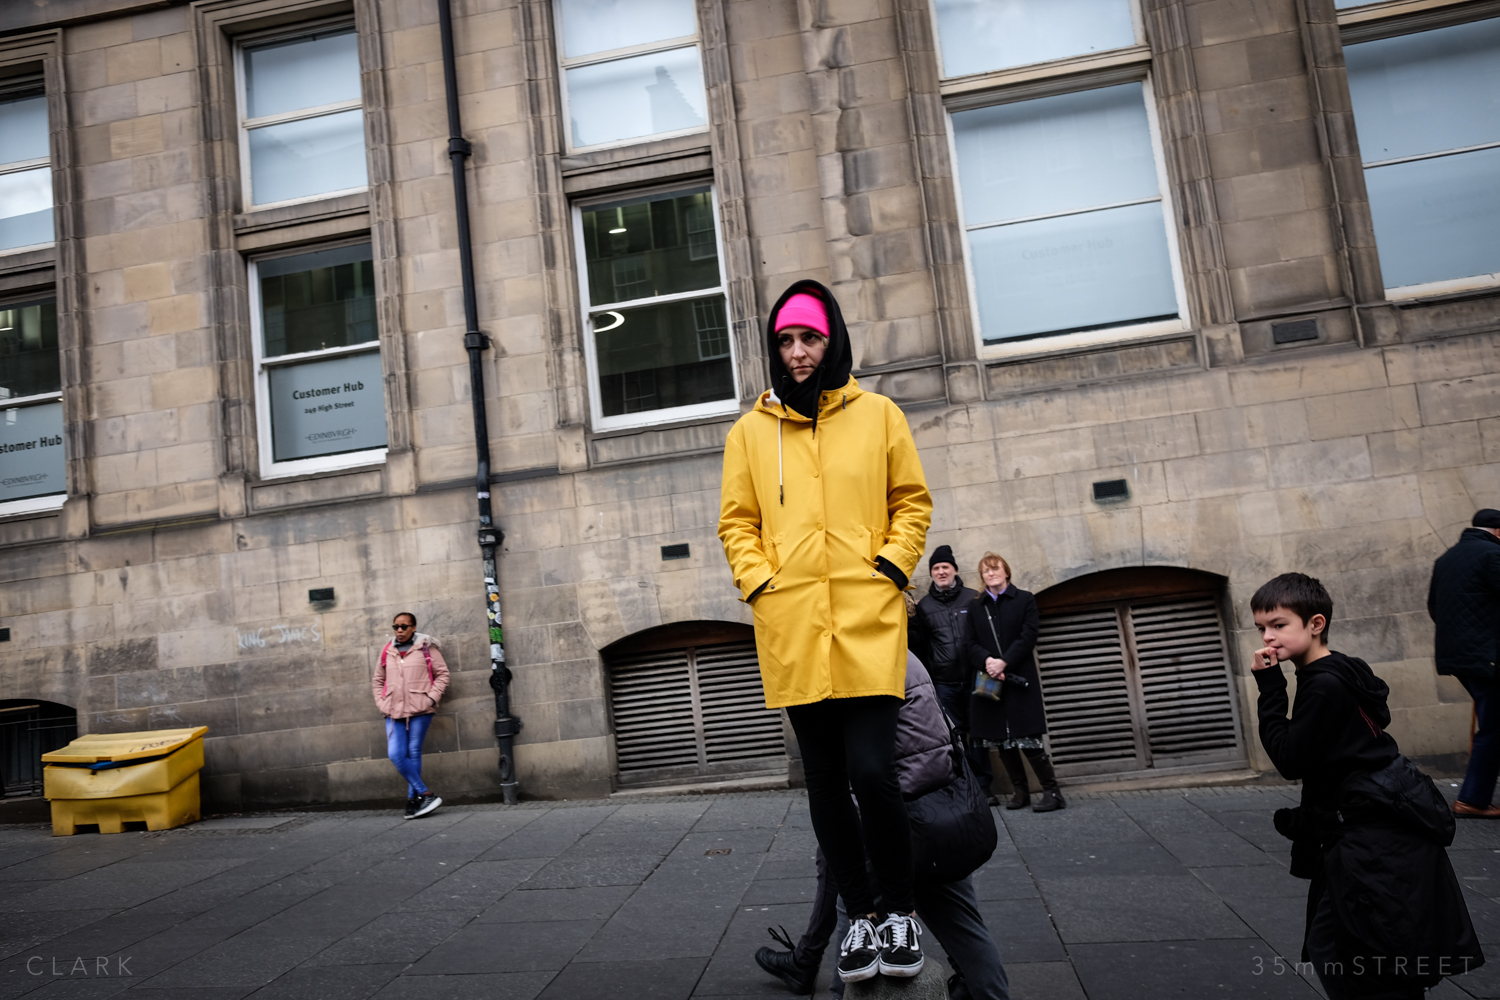 007_35mmStreet-Edinburgh-Street-Photography-20190404.jpg